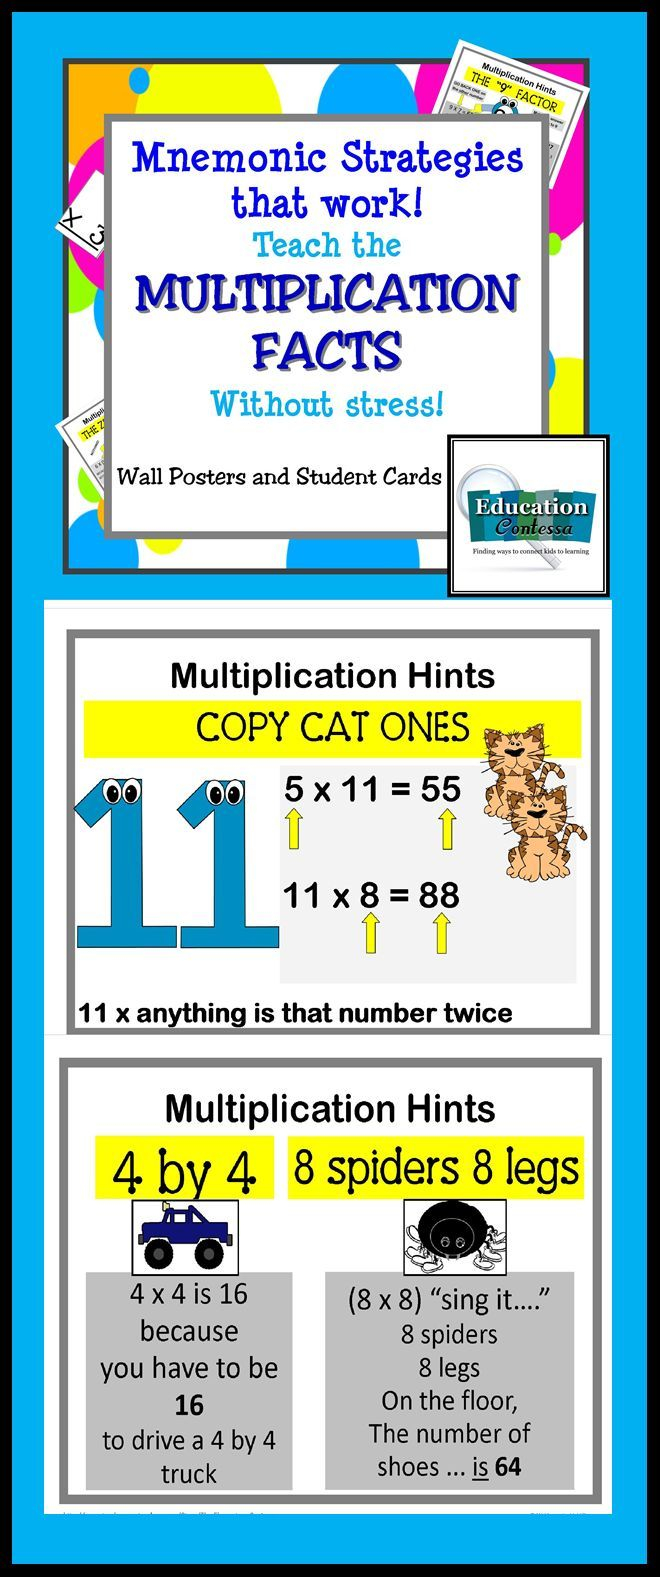 Mnemonic Strategies That Work: Teach Multiplication Facts